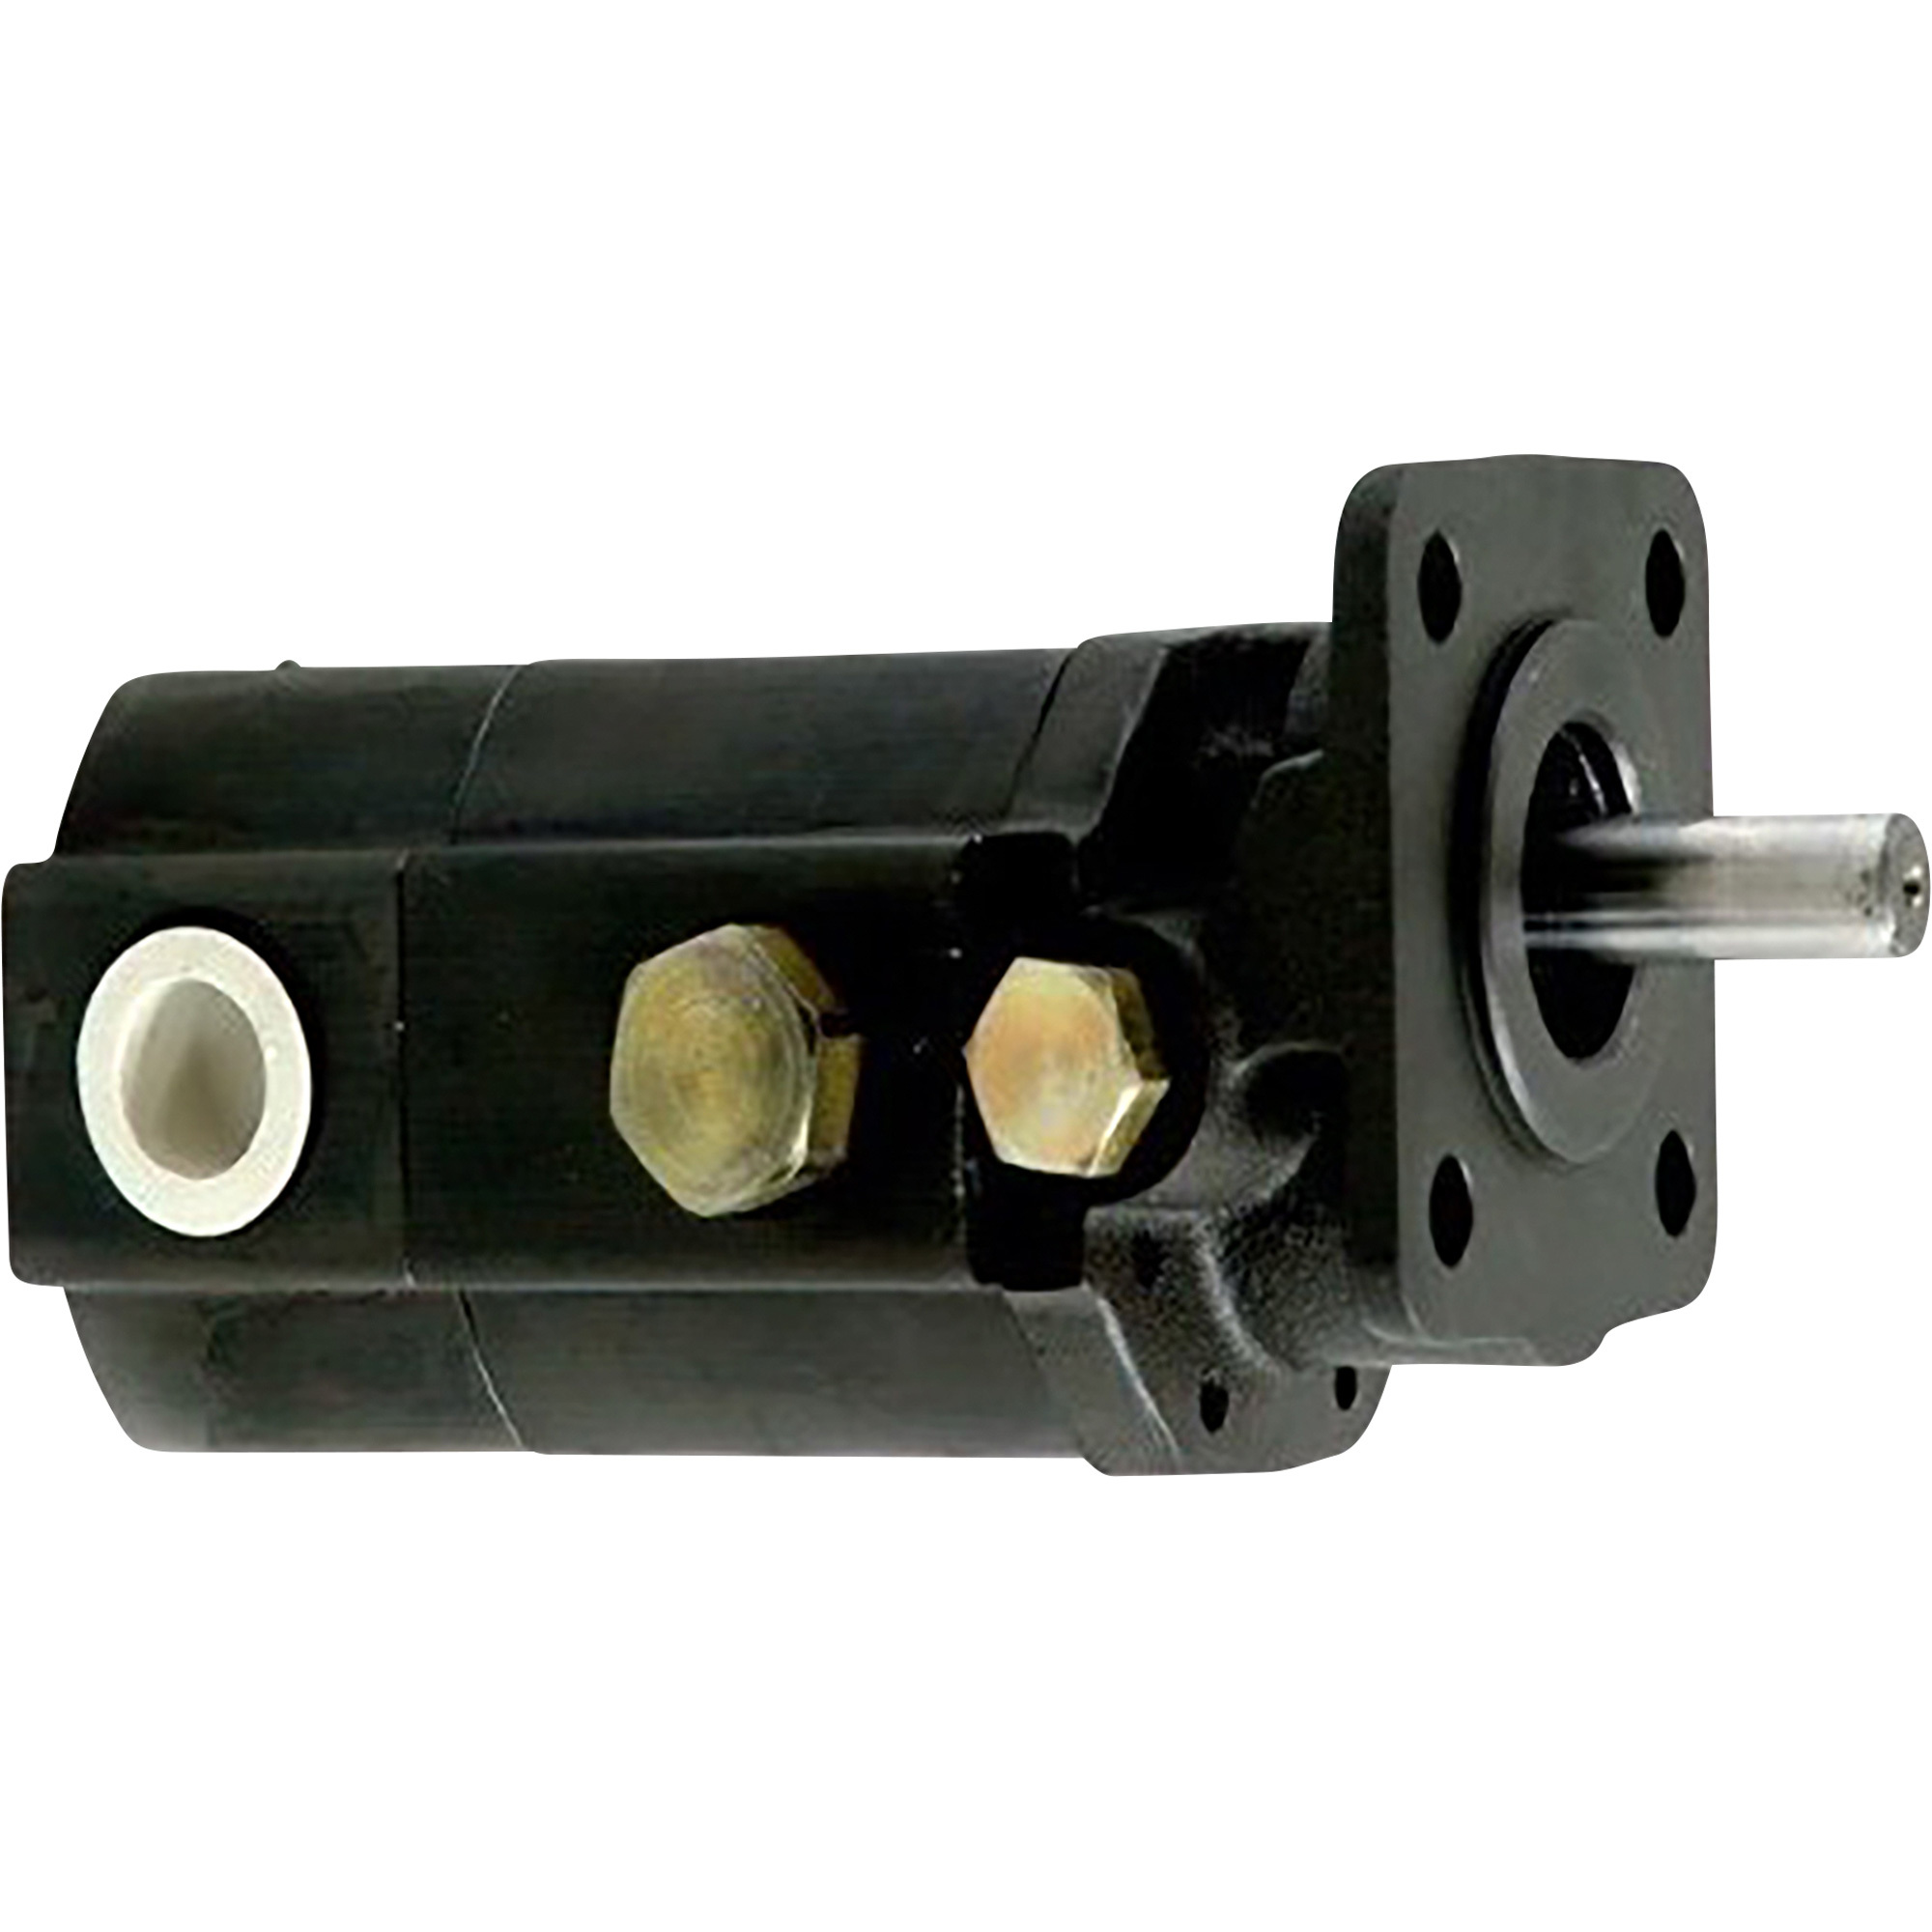 NorTrac Cast Iron Two-Stage Hydraulic Pump, 7 GPM, 1/2Inch Diameter Shaft, Model CBT-6.3/1.6cc